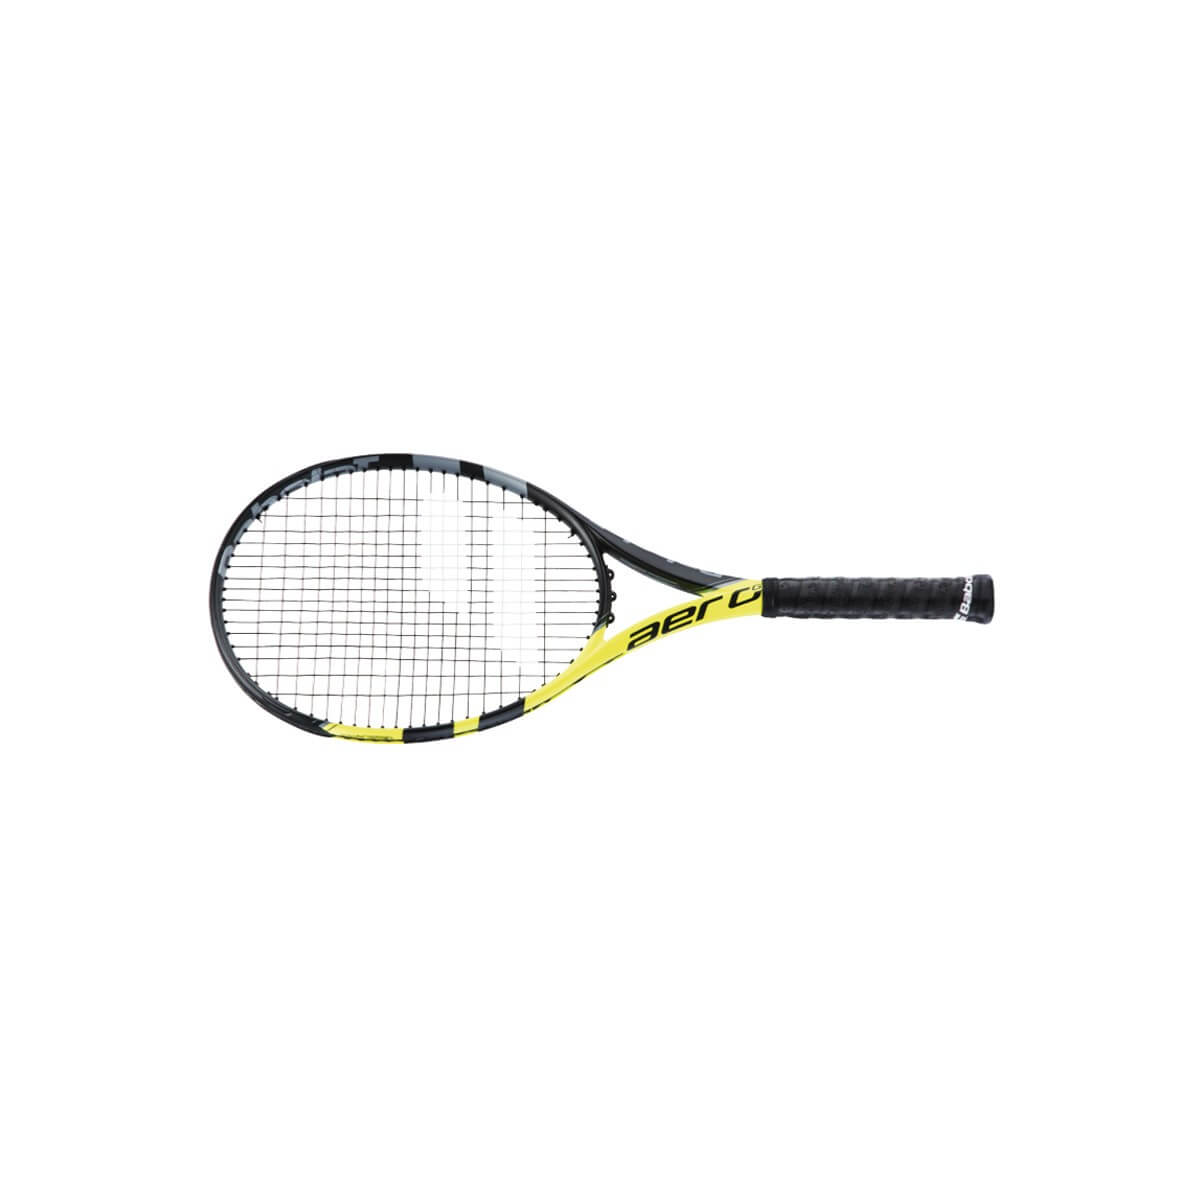 Buy Babolat Aero G Online Tennis-Point rededuct